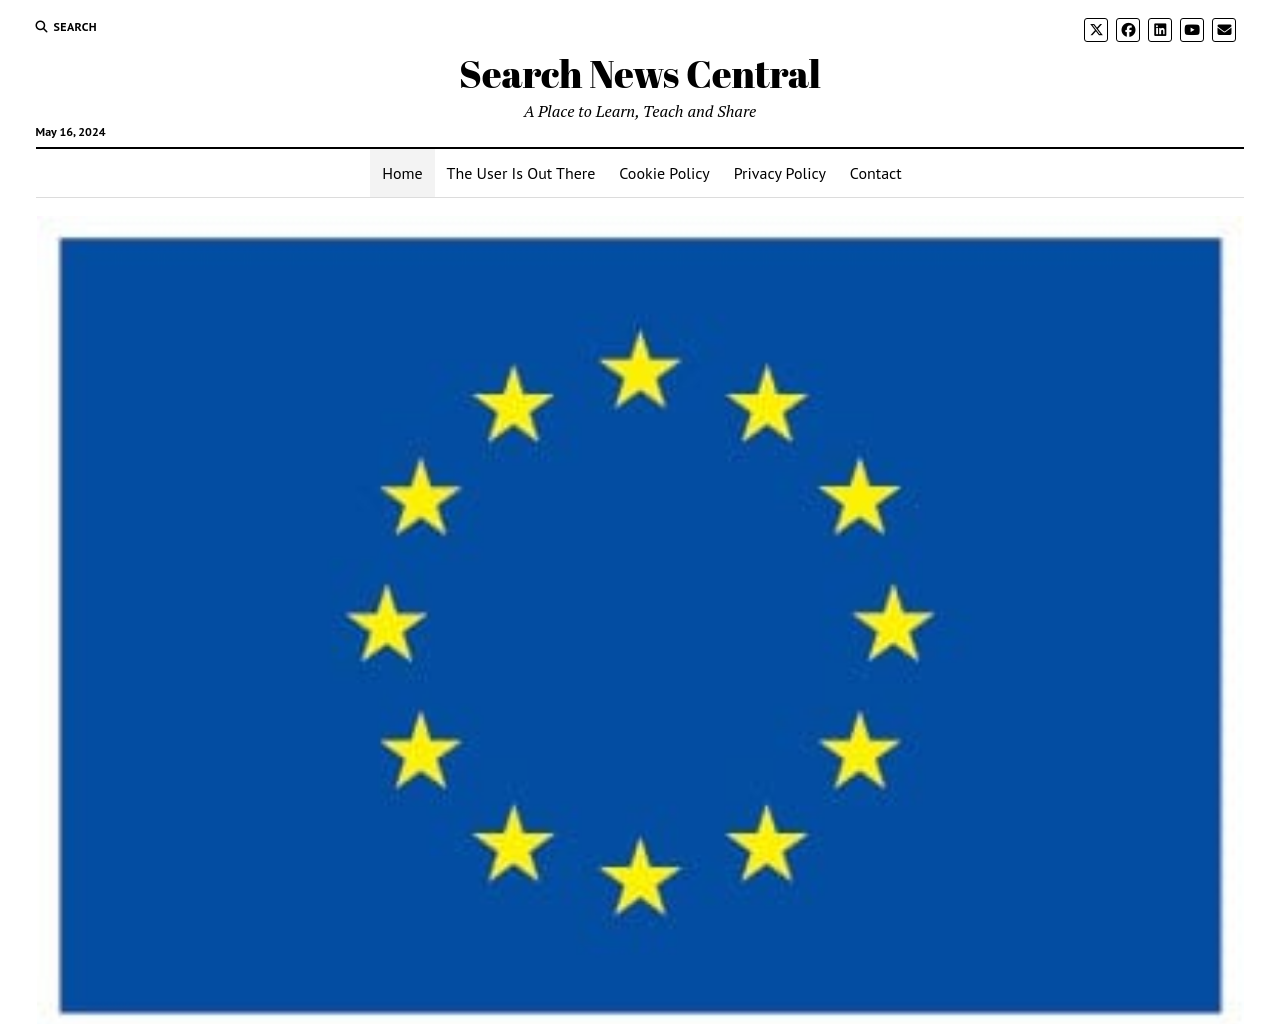 searchnewscentral.com